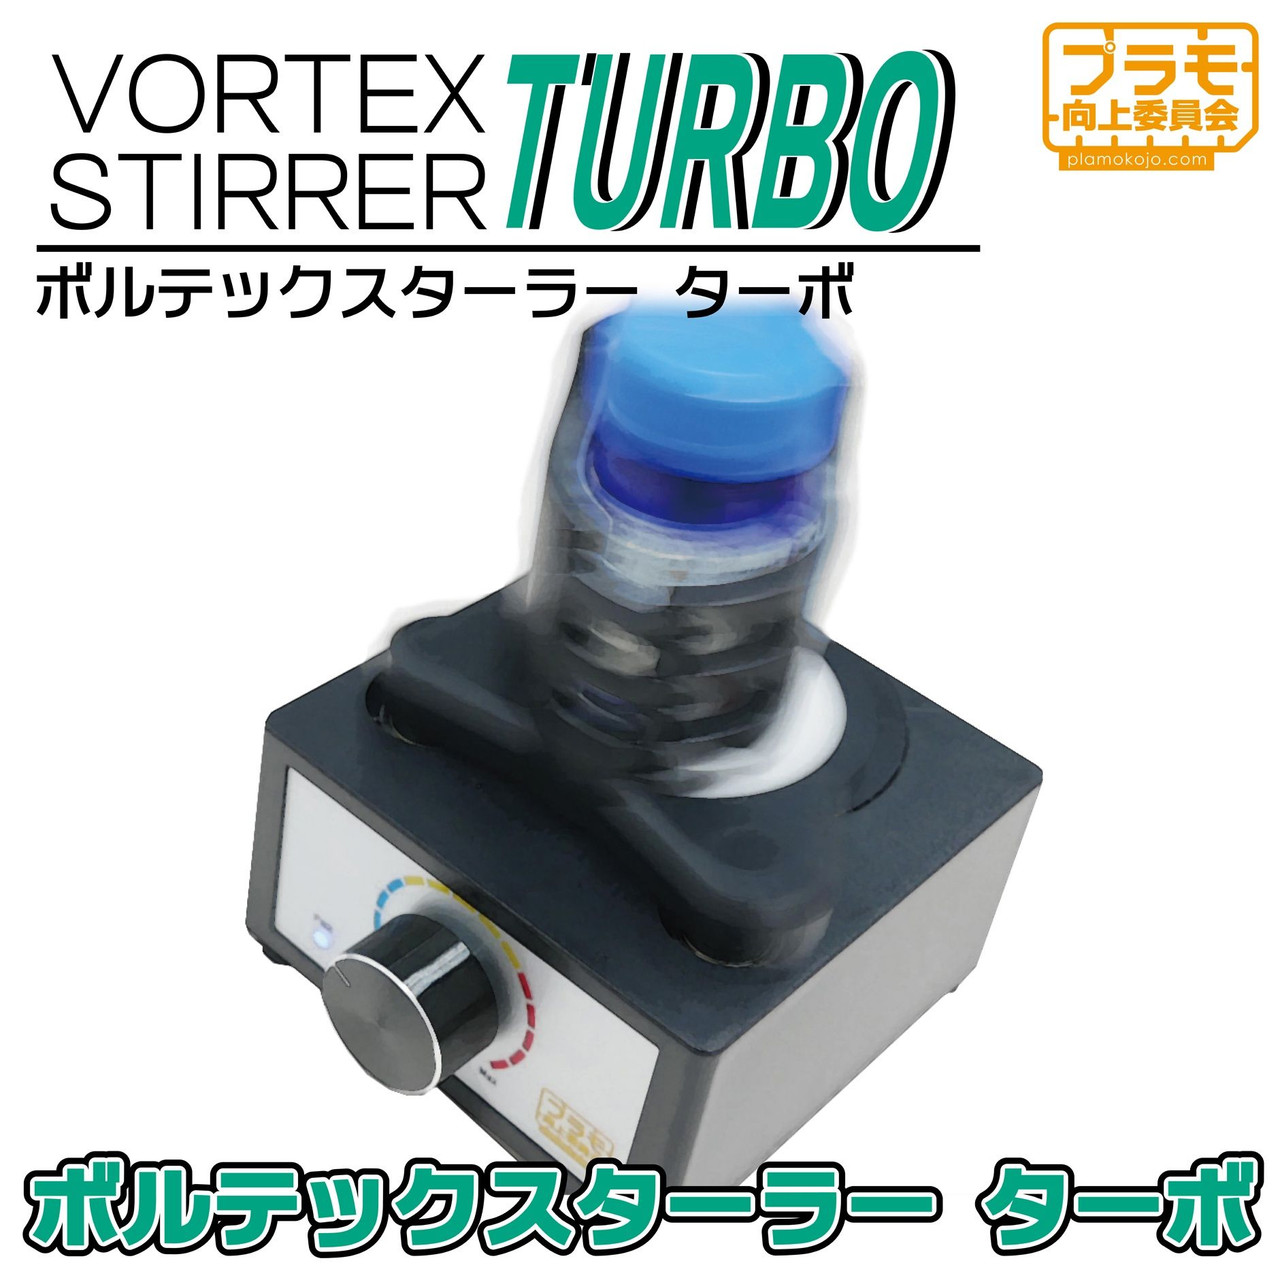 Voltex Stirrer Turbo (Paint Mixer)